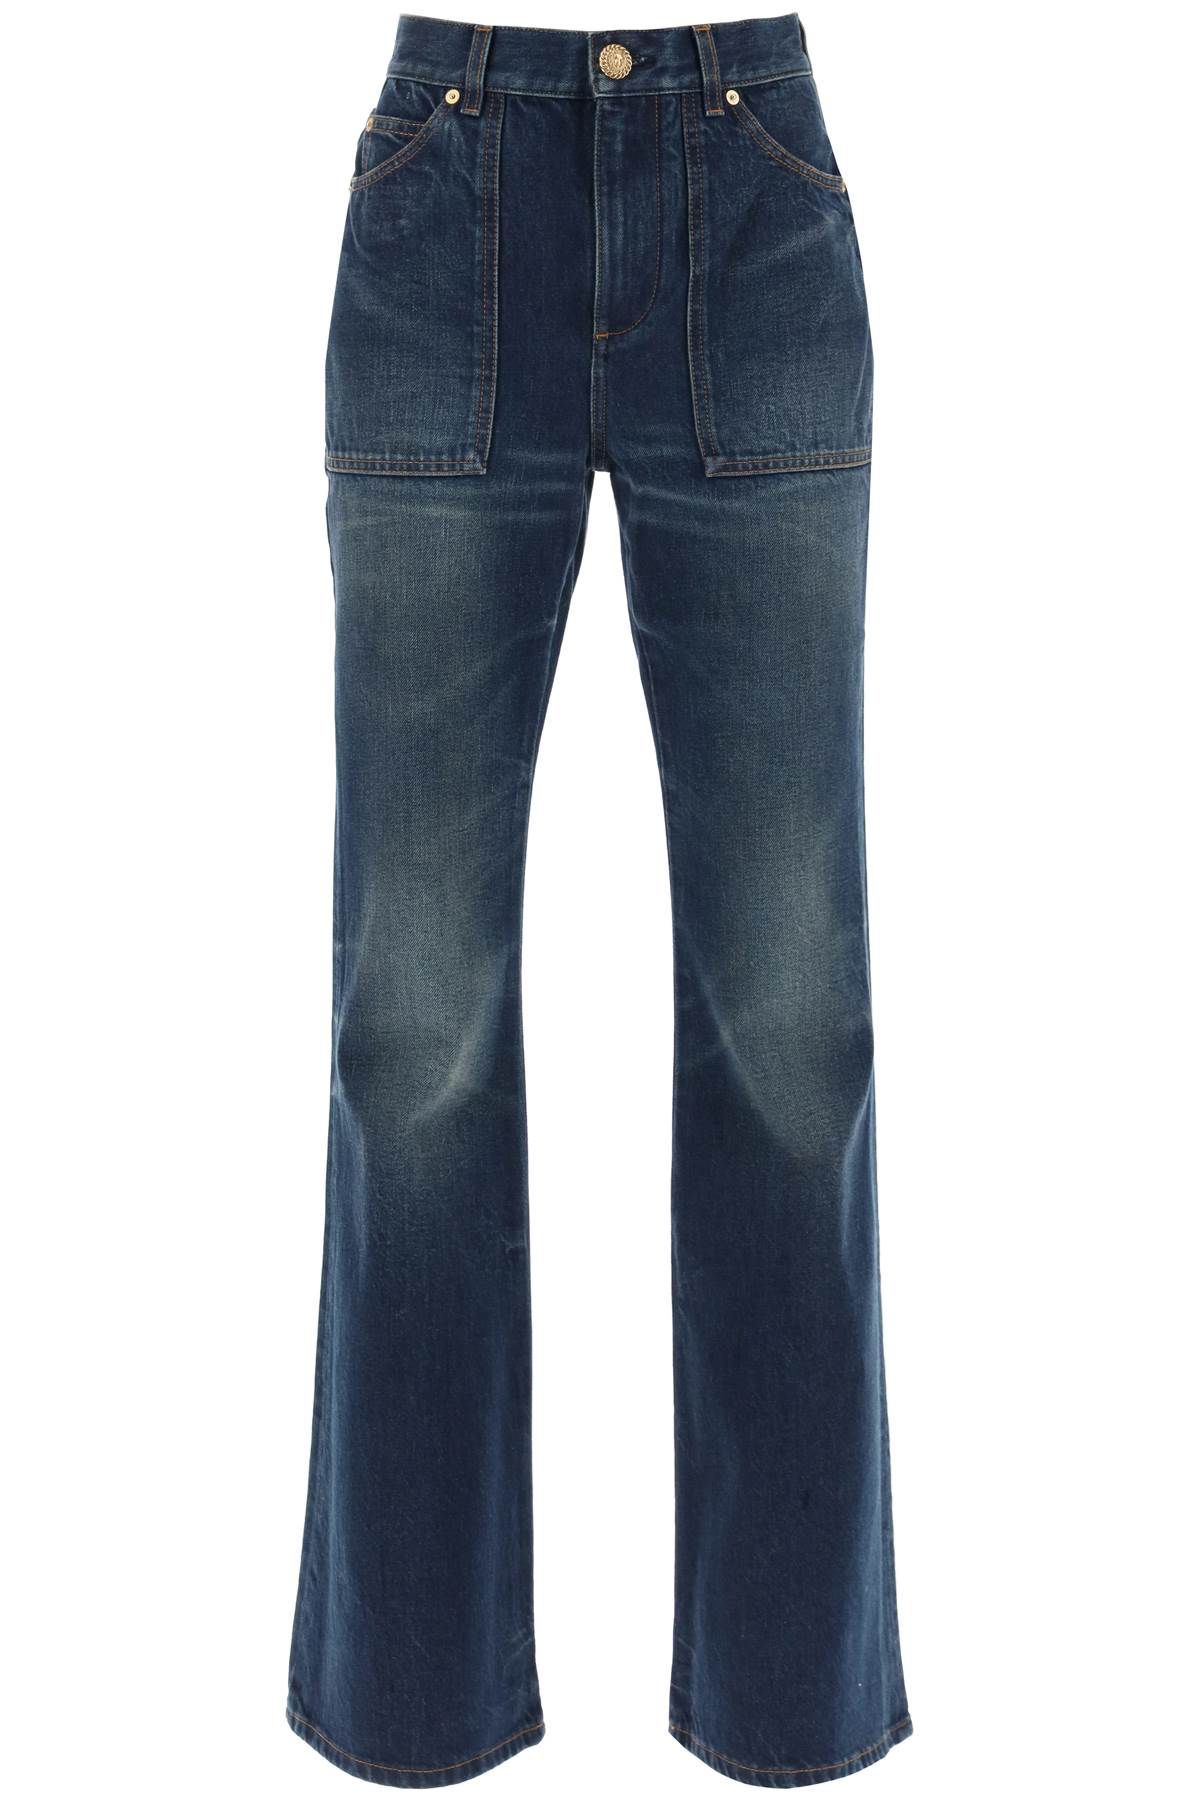 Balmain Bootcut Jeans